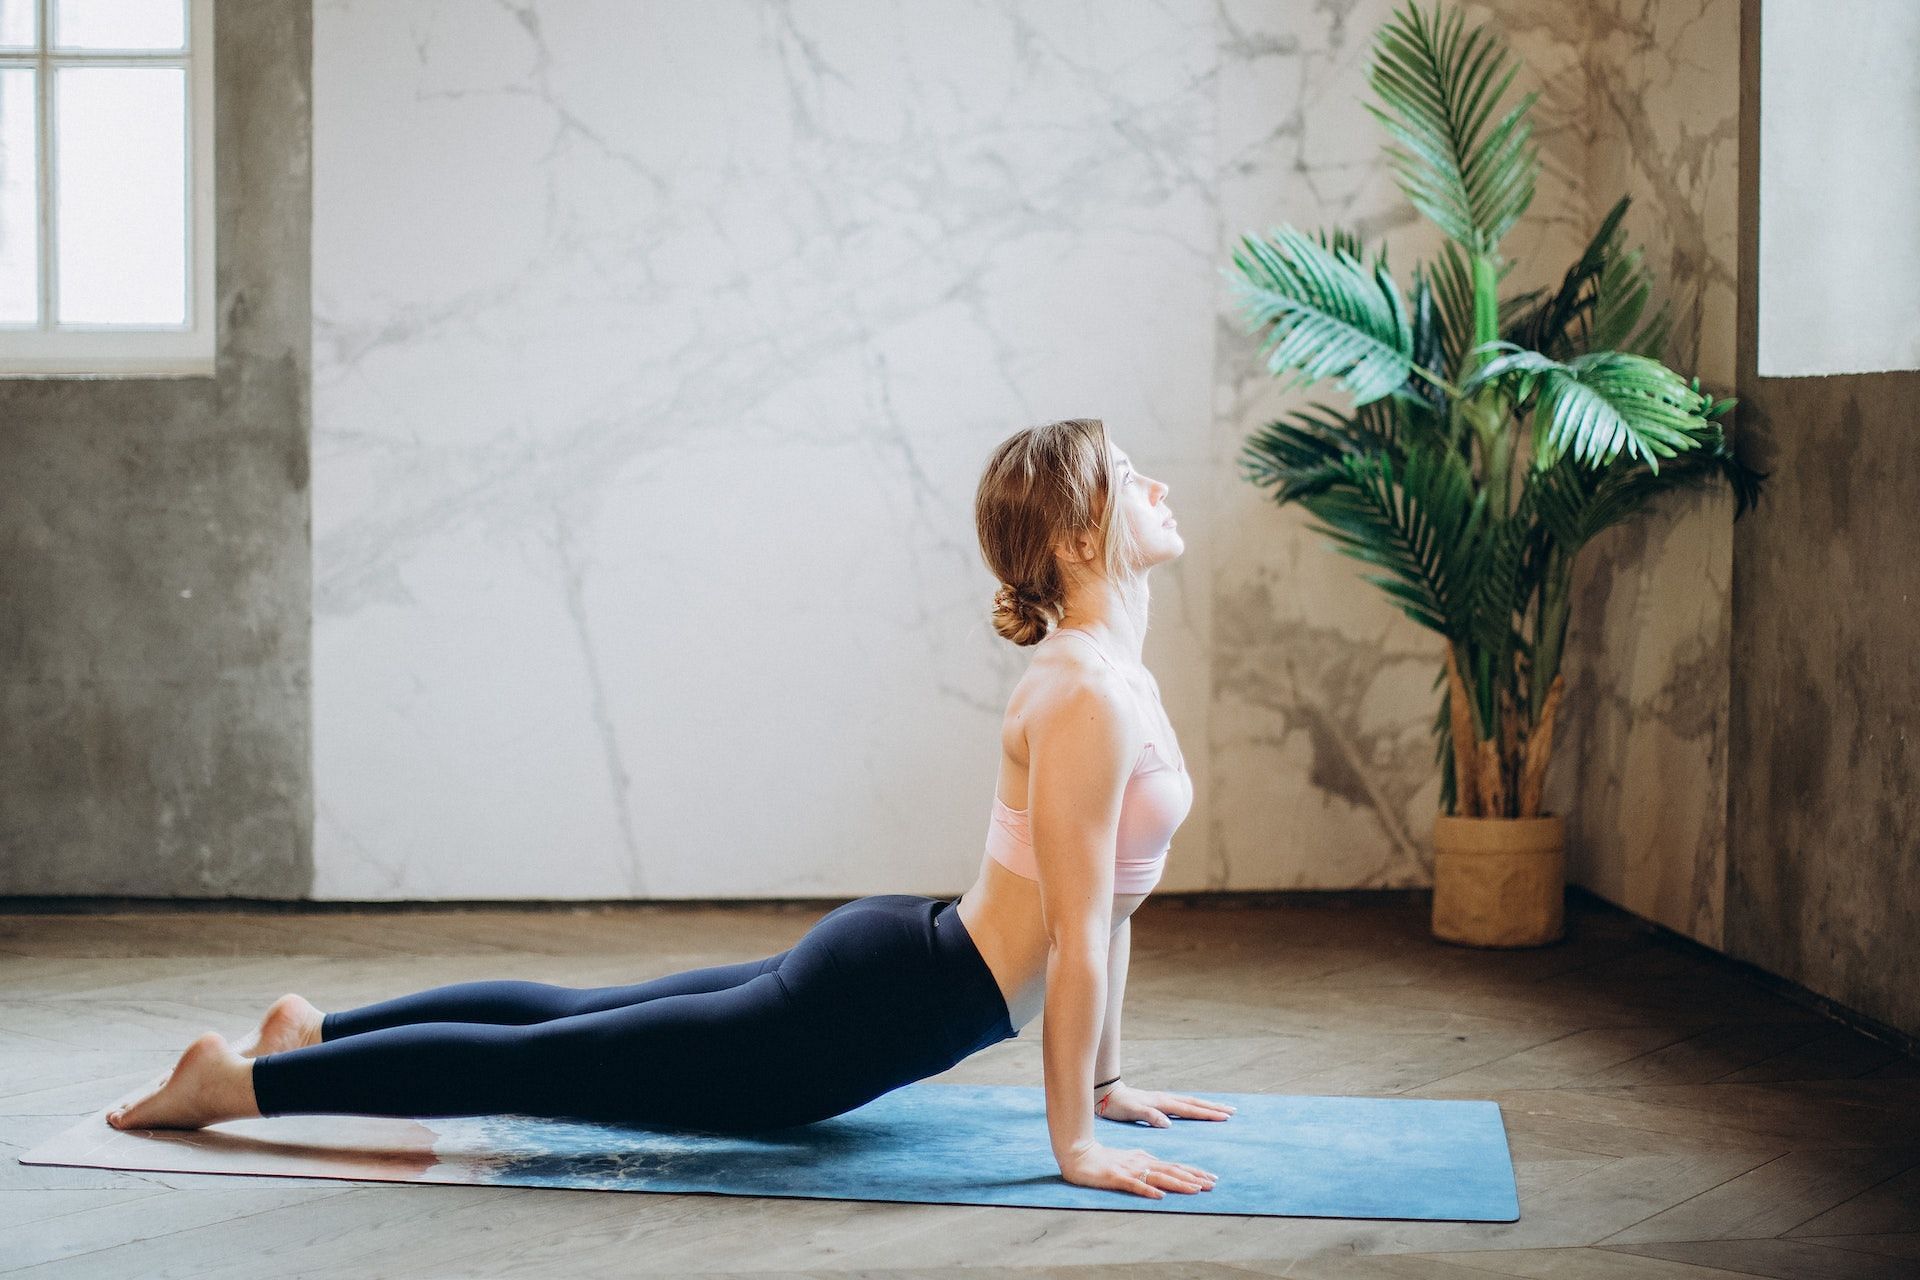 Yoga poses help ease chronic pain. (Photo via Pexels/Elina Fairytale)